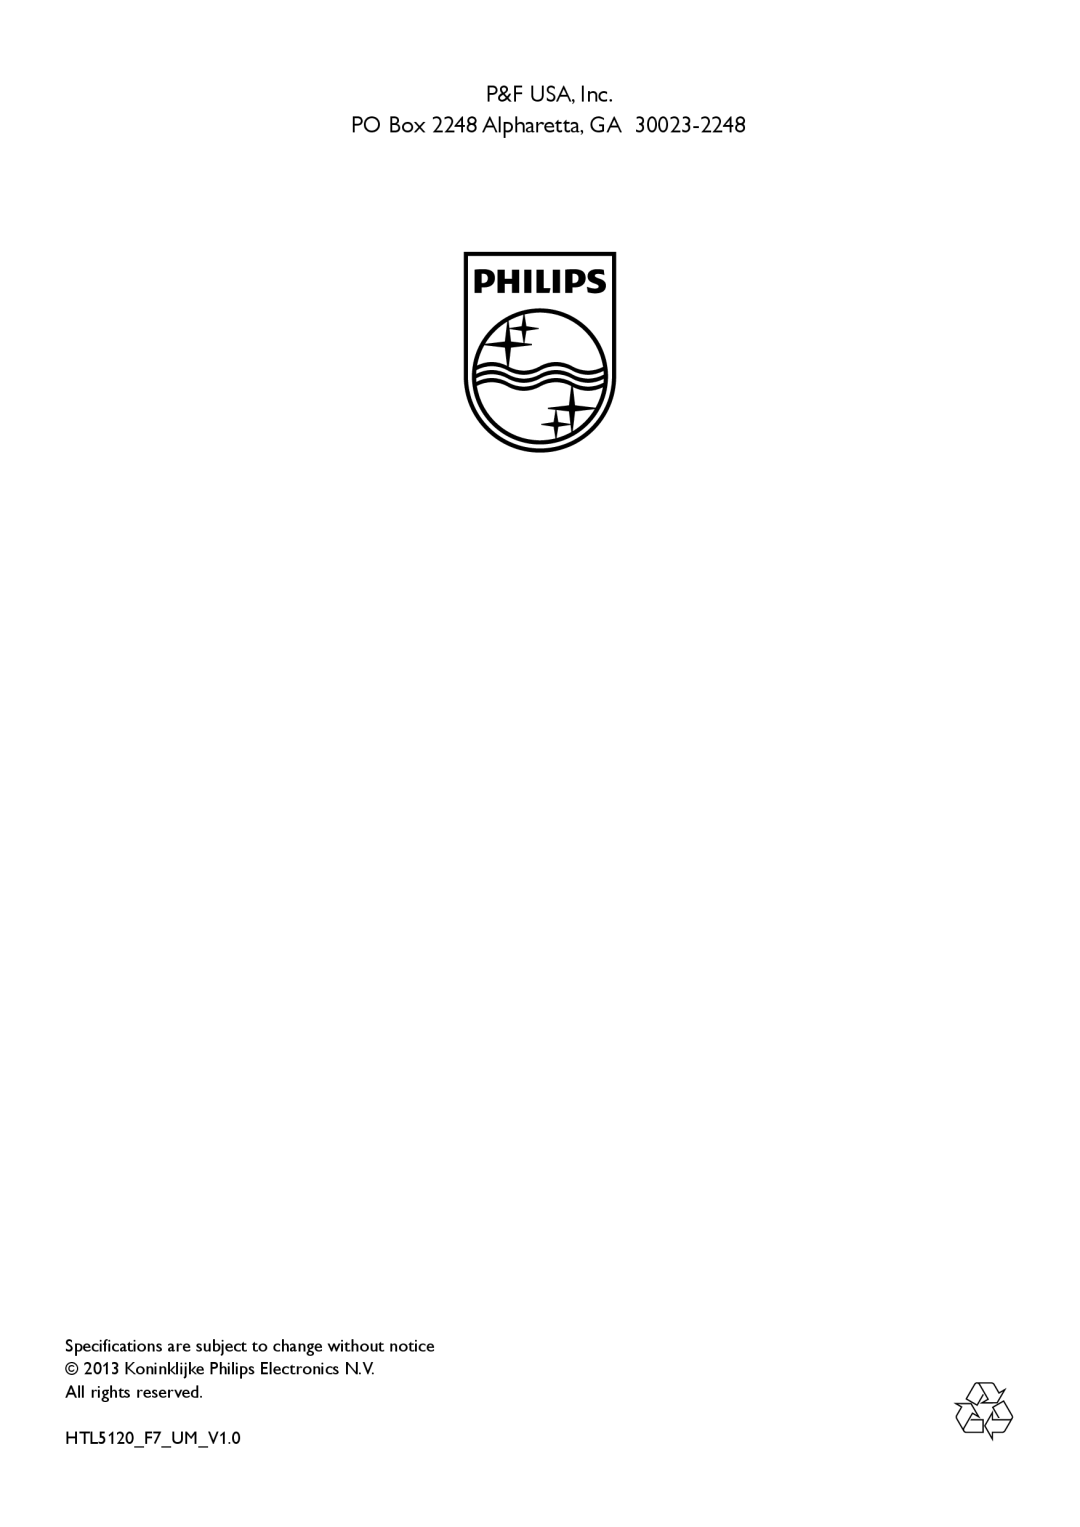 Philips user manual P&F USA, Inc PO Box 2248 Alpharetta, GA, All rights reserved HTL5120 F7 UM 